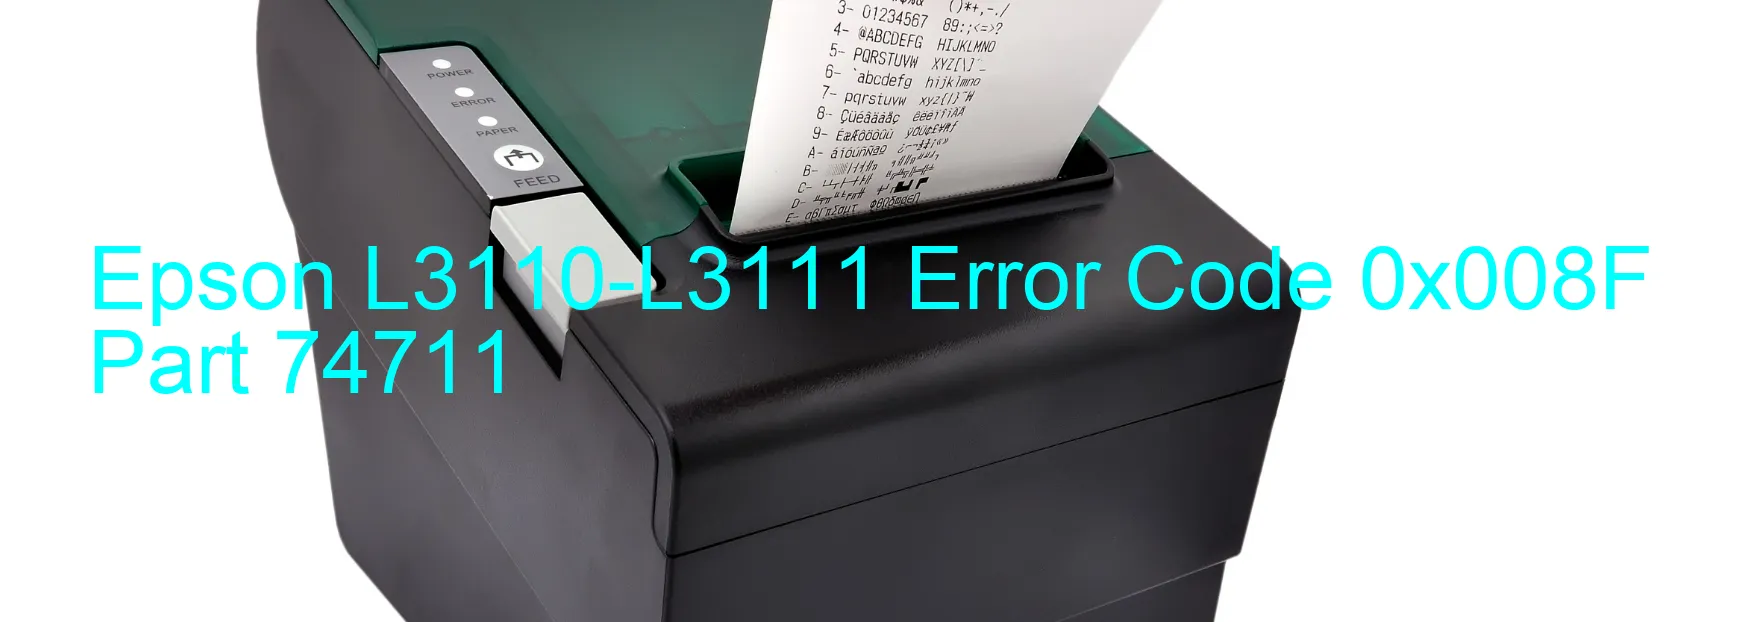 Epson L3110-L3111 Error Code 0x008F Part 74711